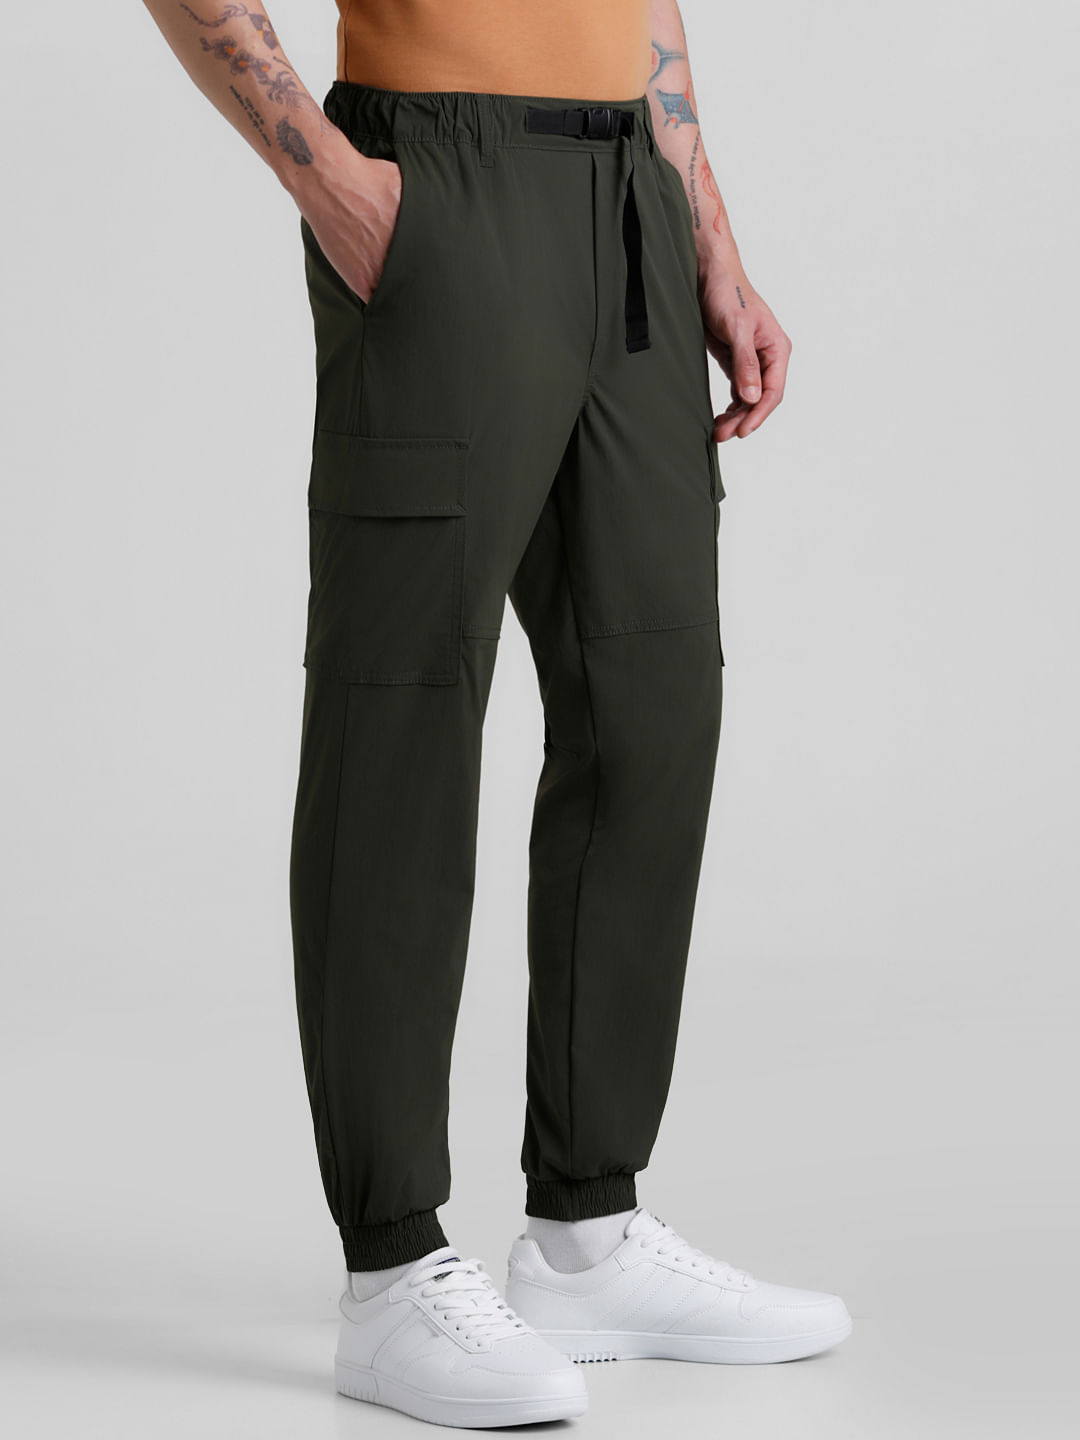 Green Cargo Pants Y2k Streetwear Baggy Oversized Look – Vanity Island  Magazine